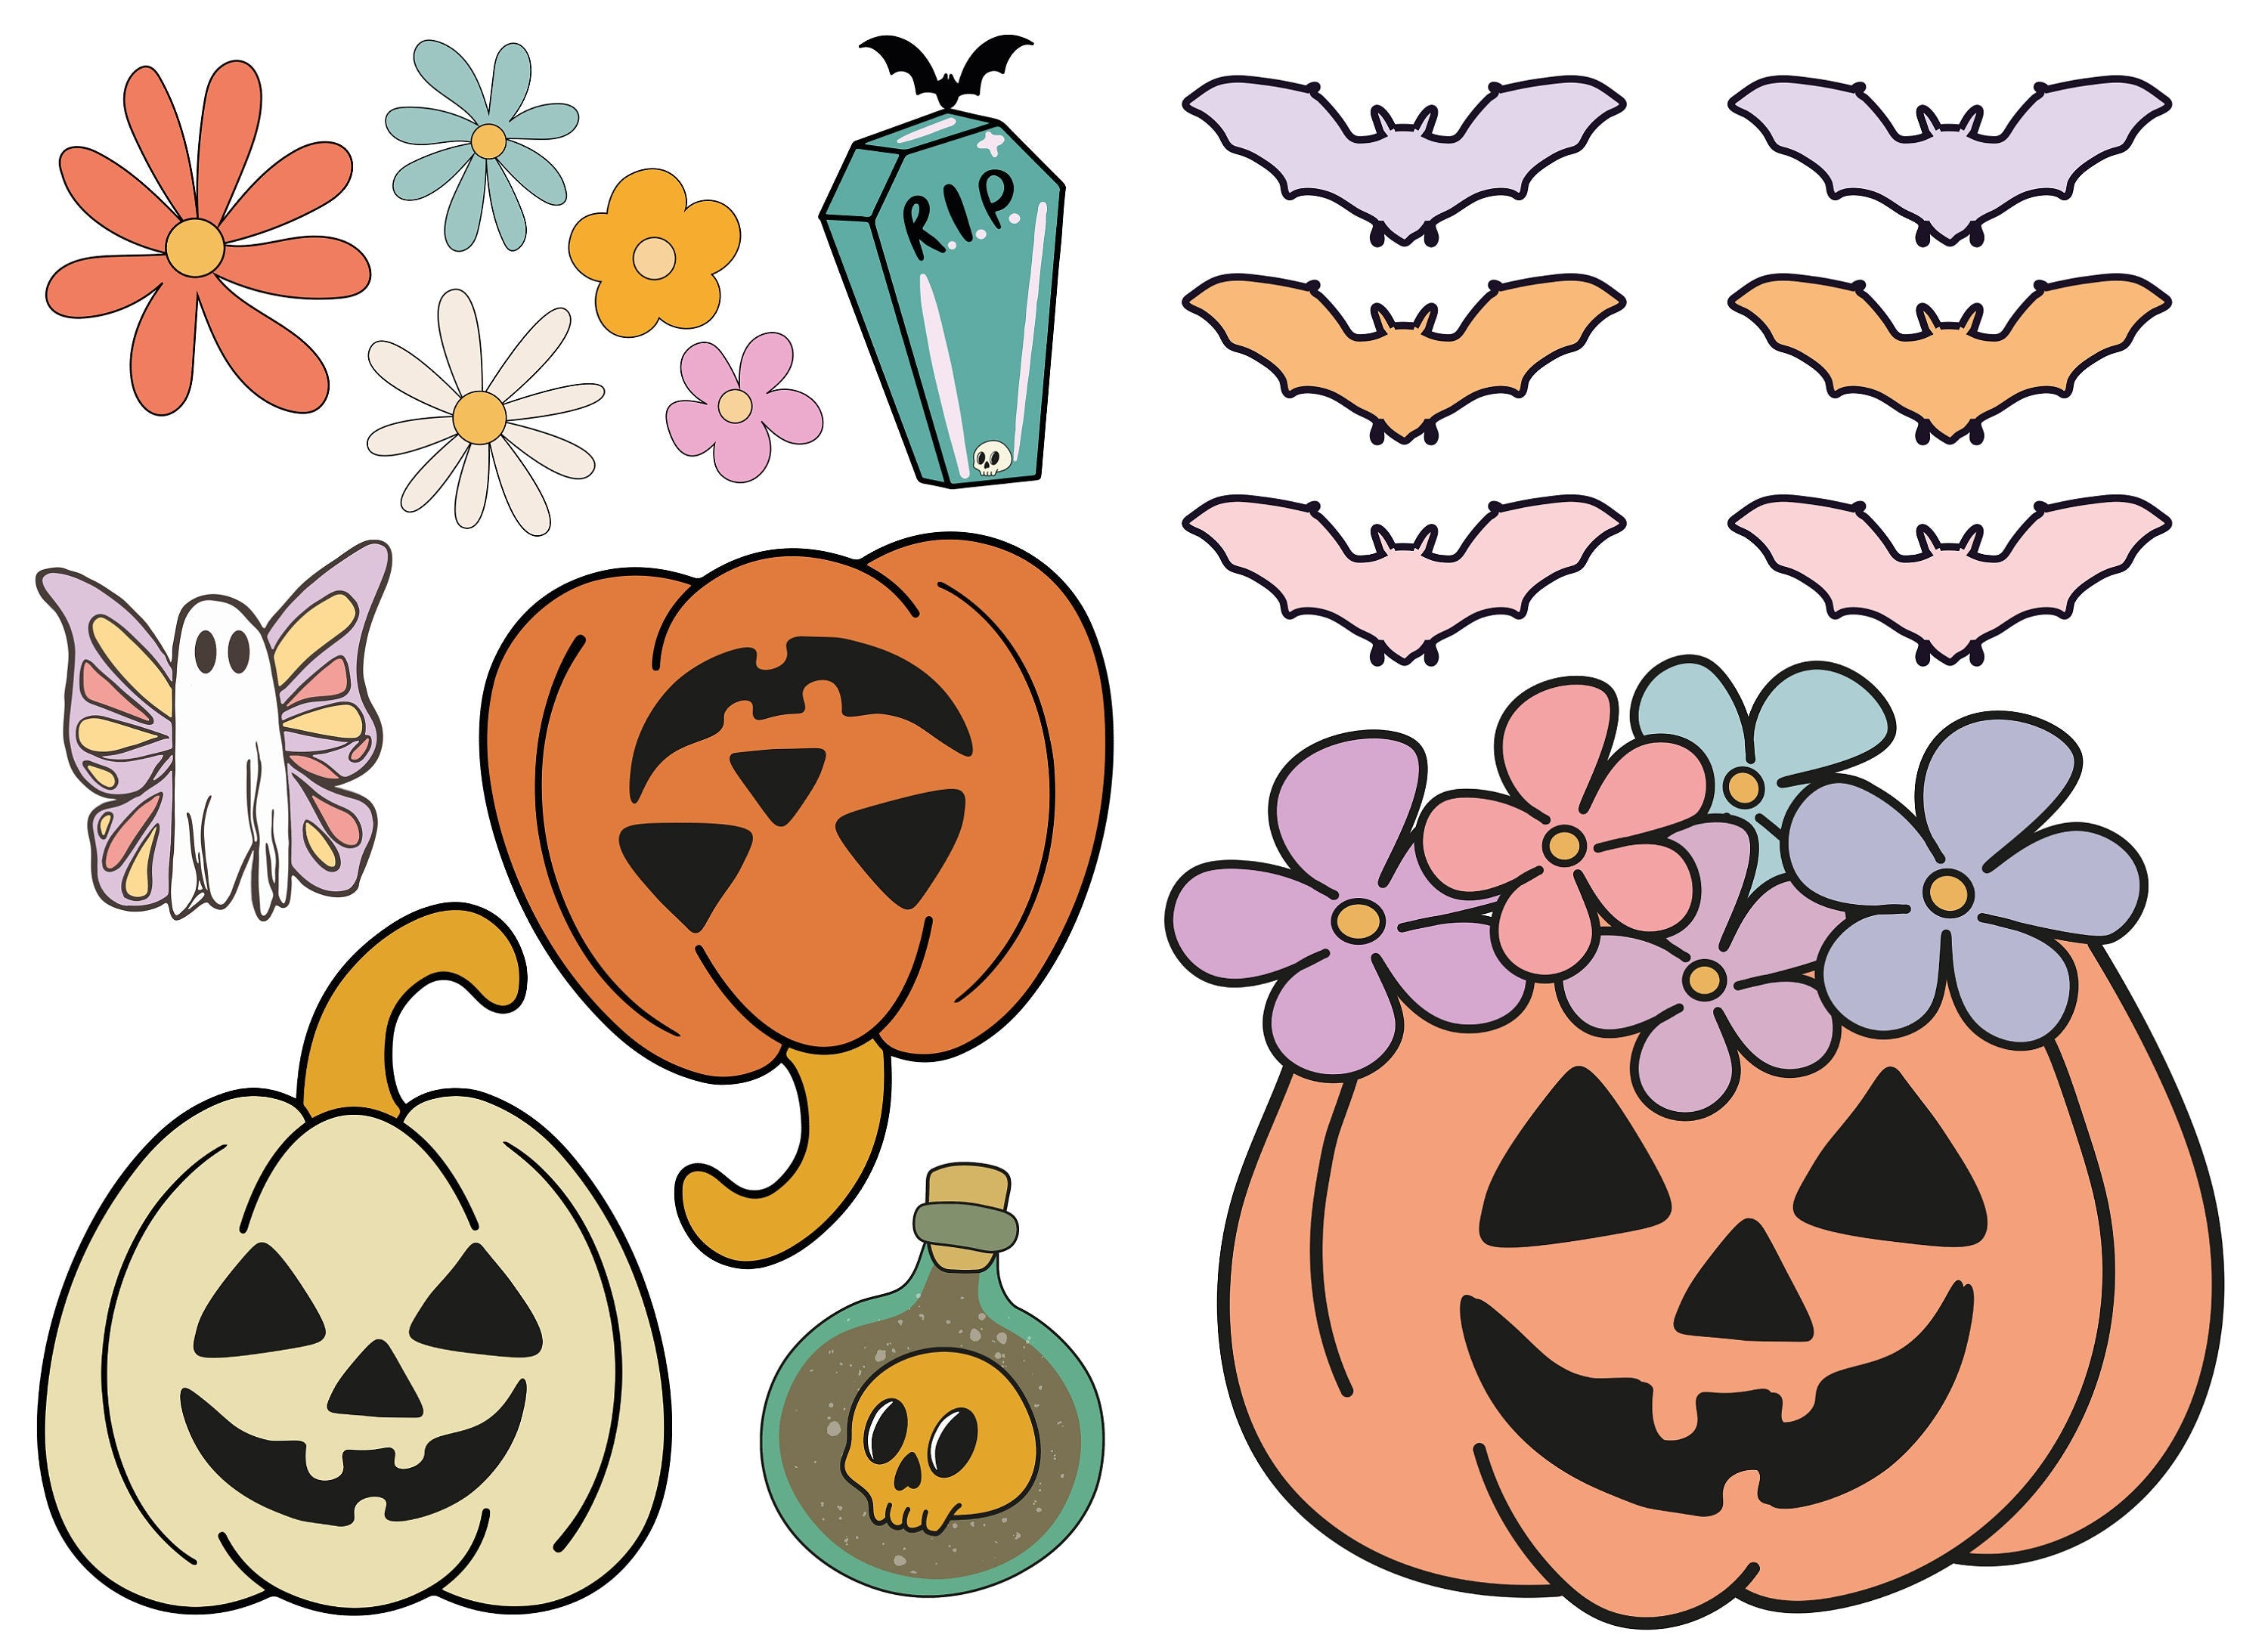 Retro Groovy Halloween Window Decorations Stickers, Pumpkin, Ghosts, Bats Mix Halloween Decor